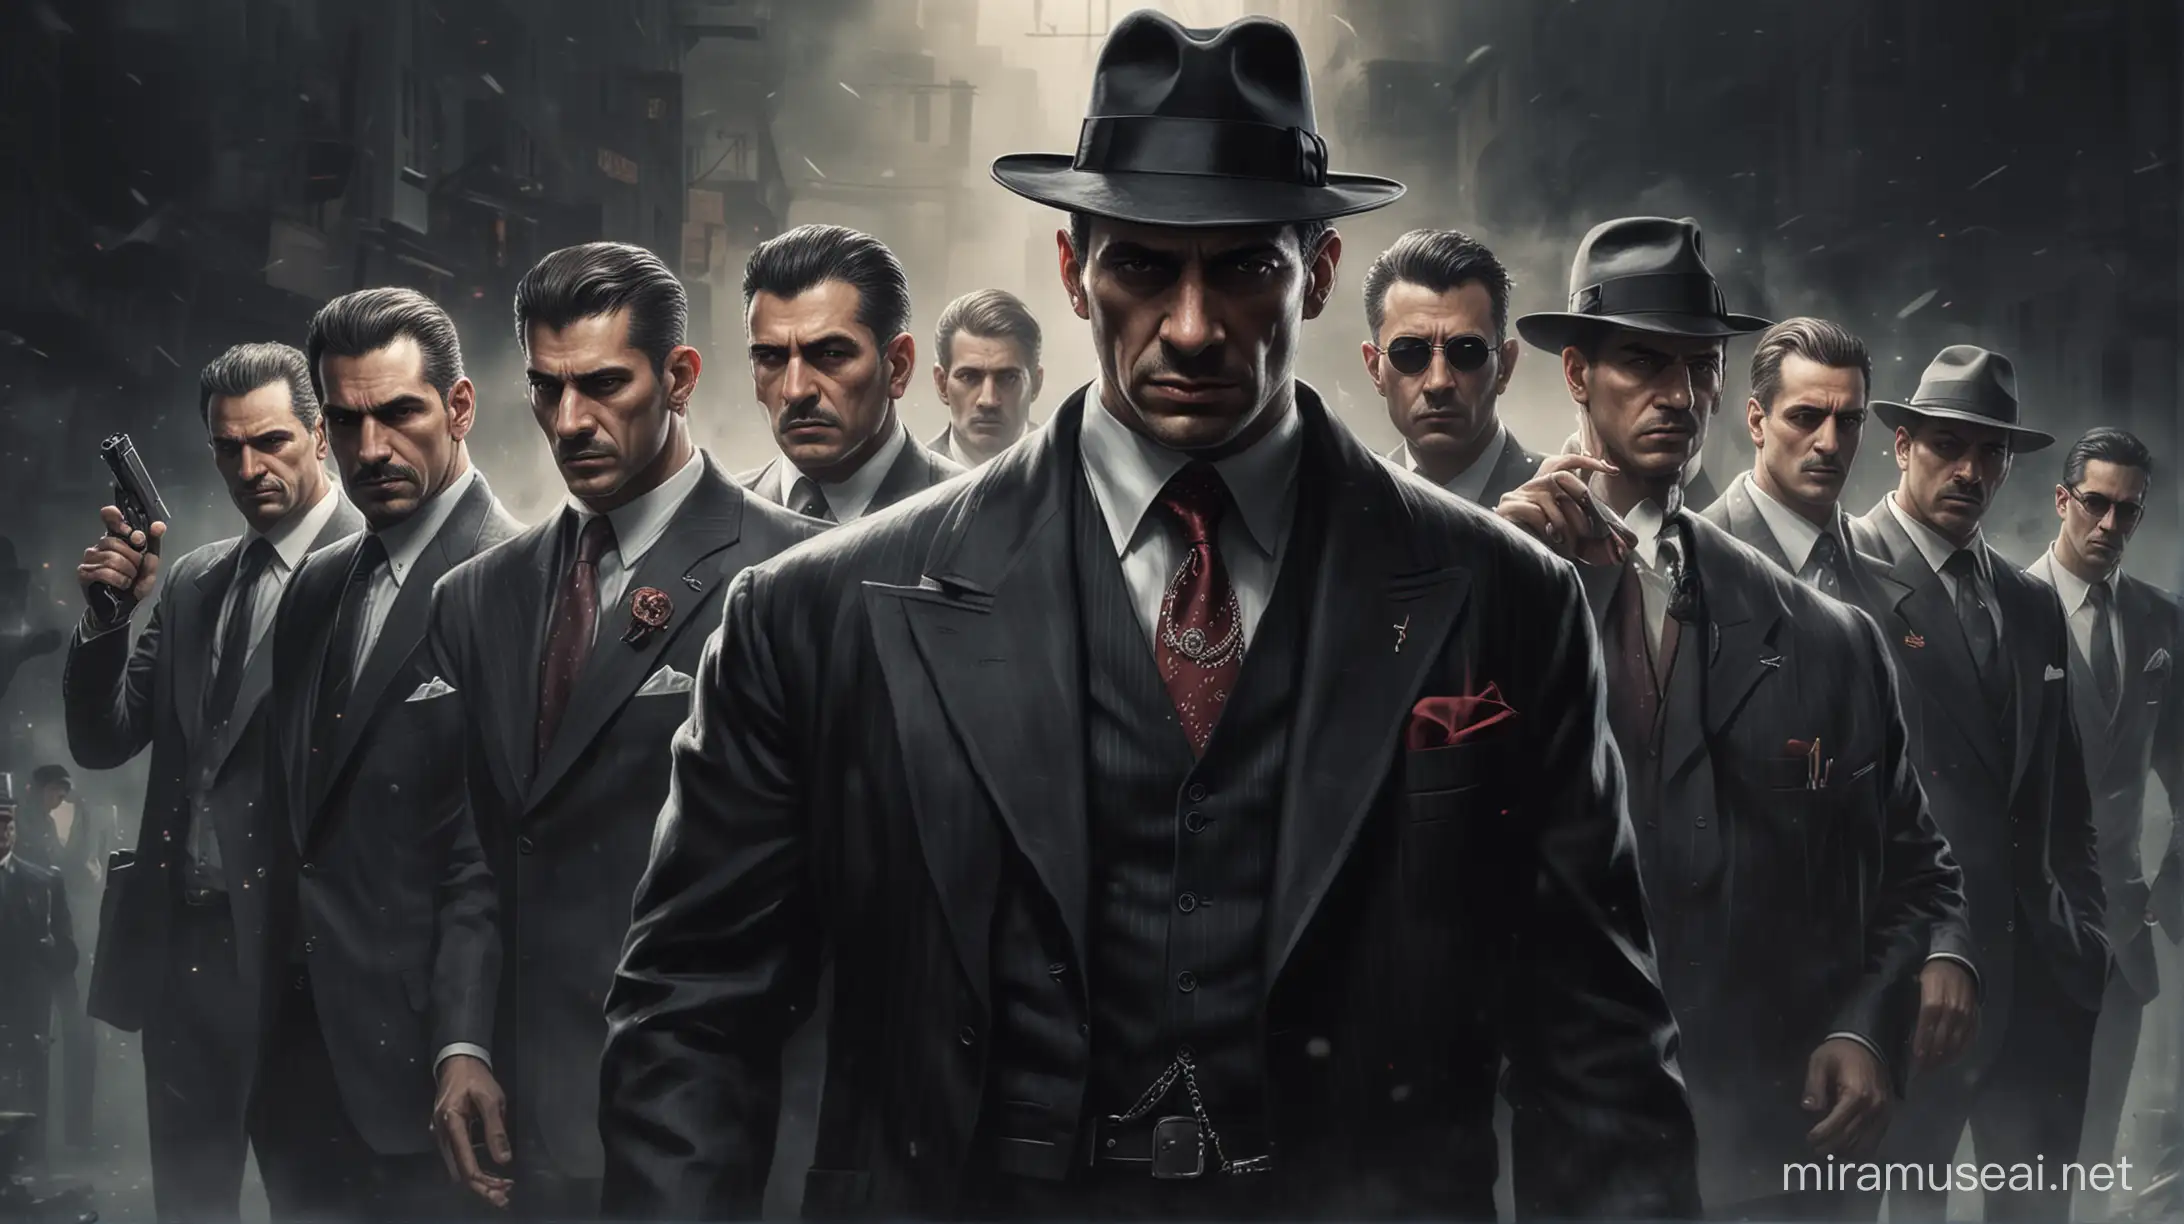 Mafia God and Players Gathered in Dark Secrecy